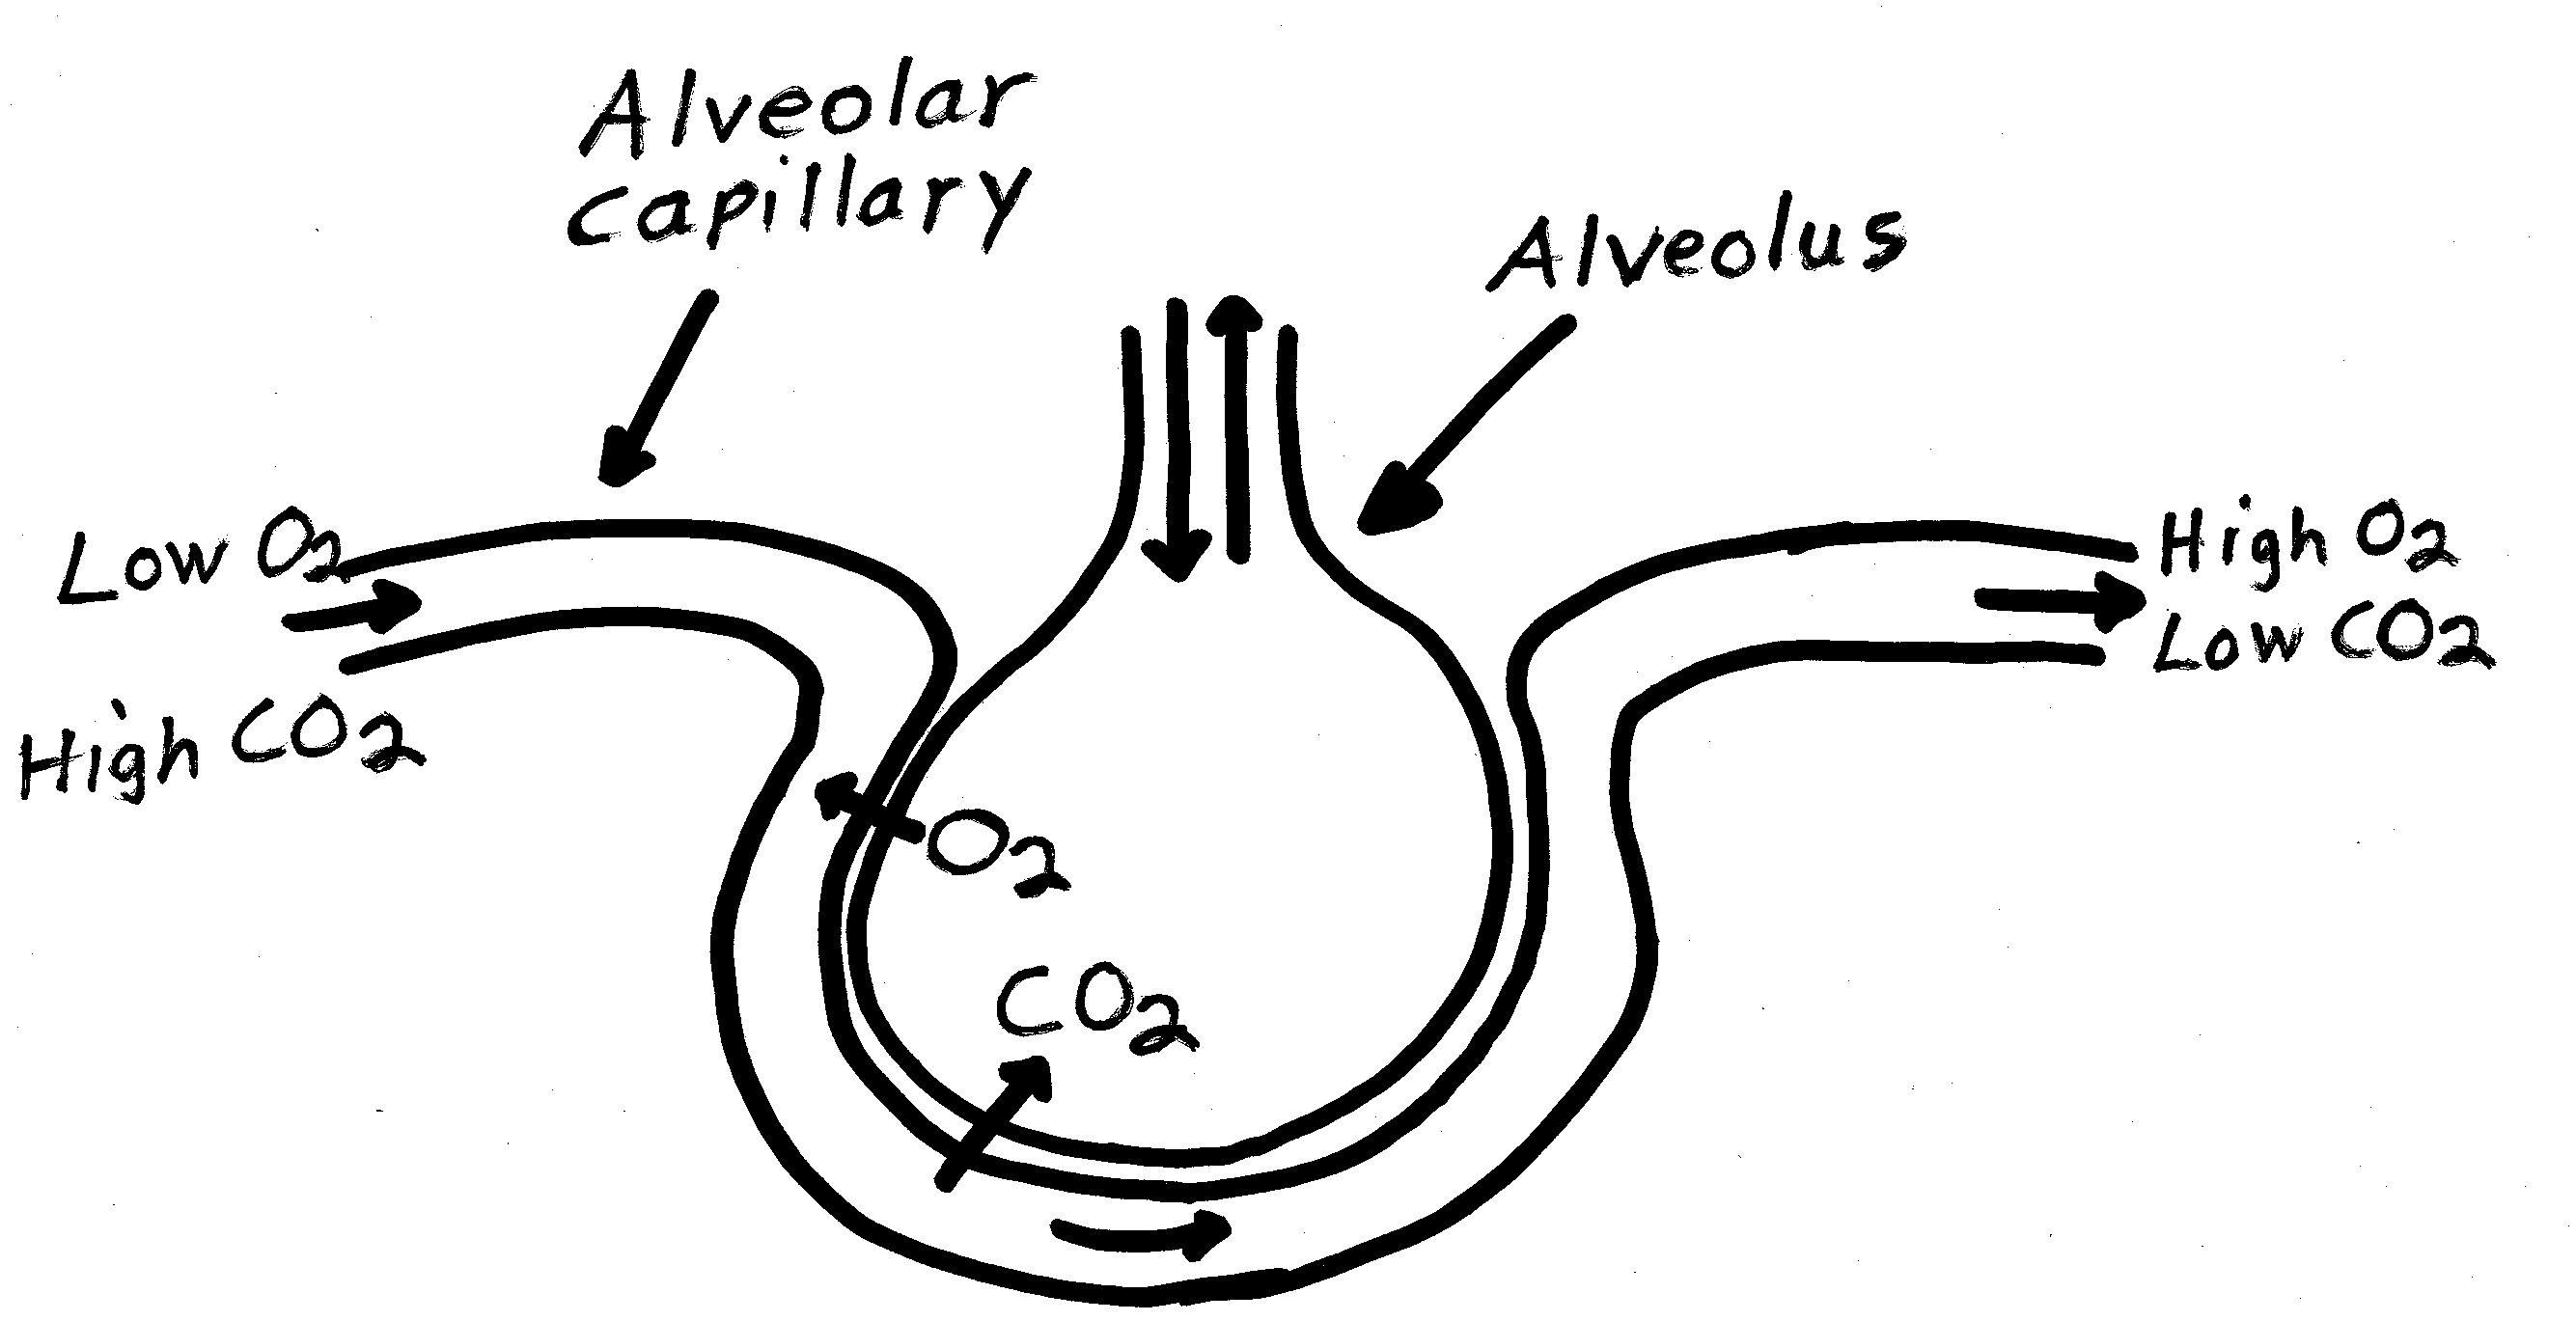 (http://www.ndsu.edu/pubweb/~tcolvill/images/Alveolus.gif)